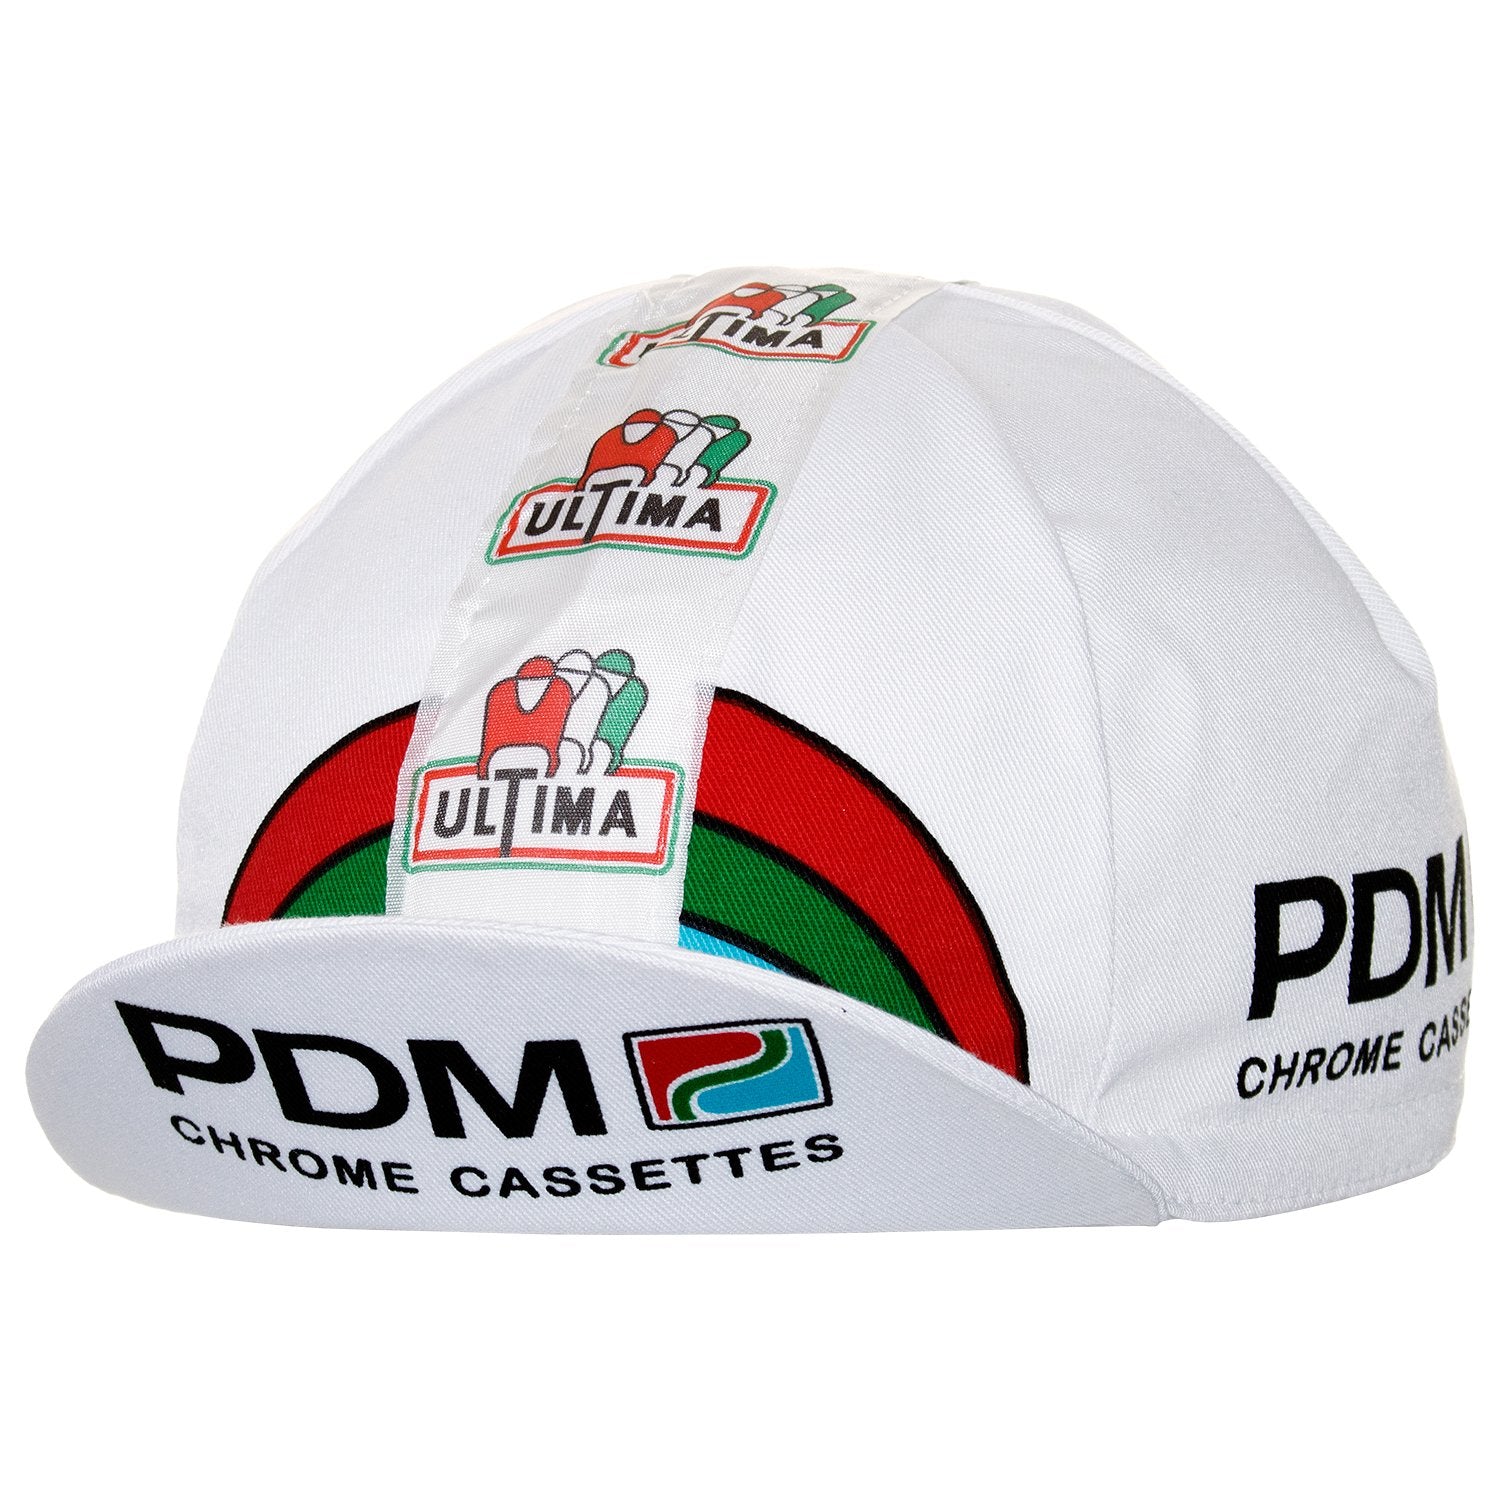 PDM Retro Cycling Cap